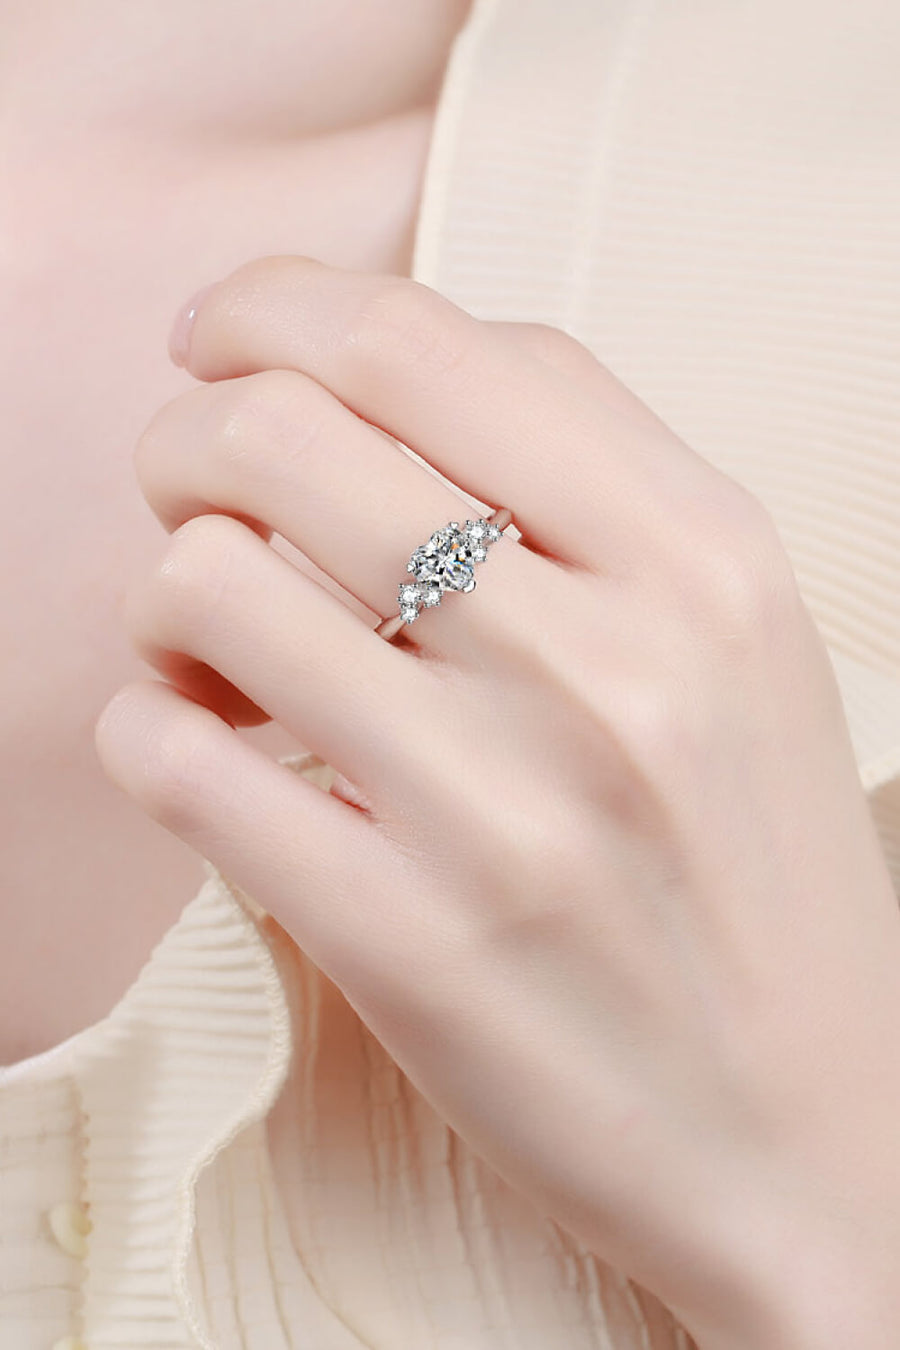 Best Diamond Ring Jewelry Gifts for Women | 1 Carat Heart Diamond Ring | MASON New York